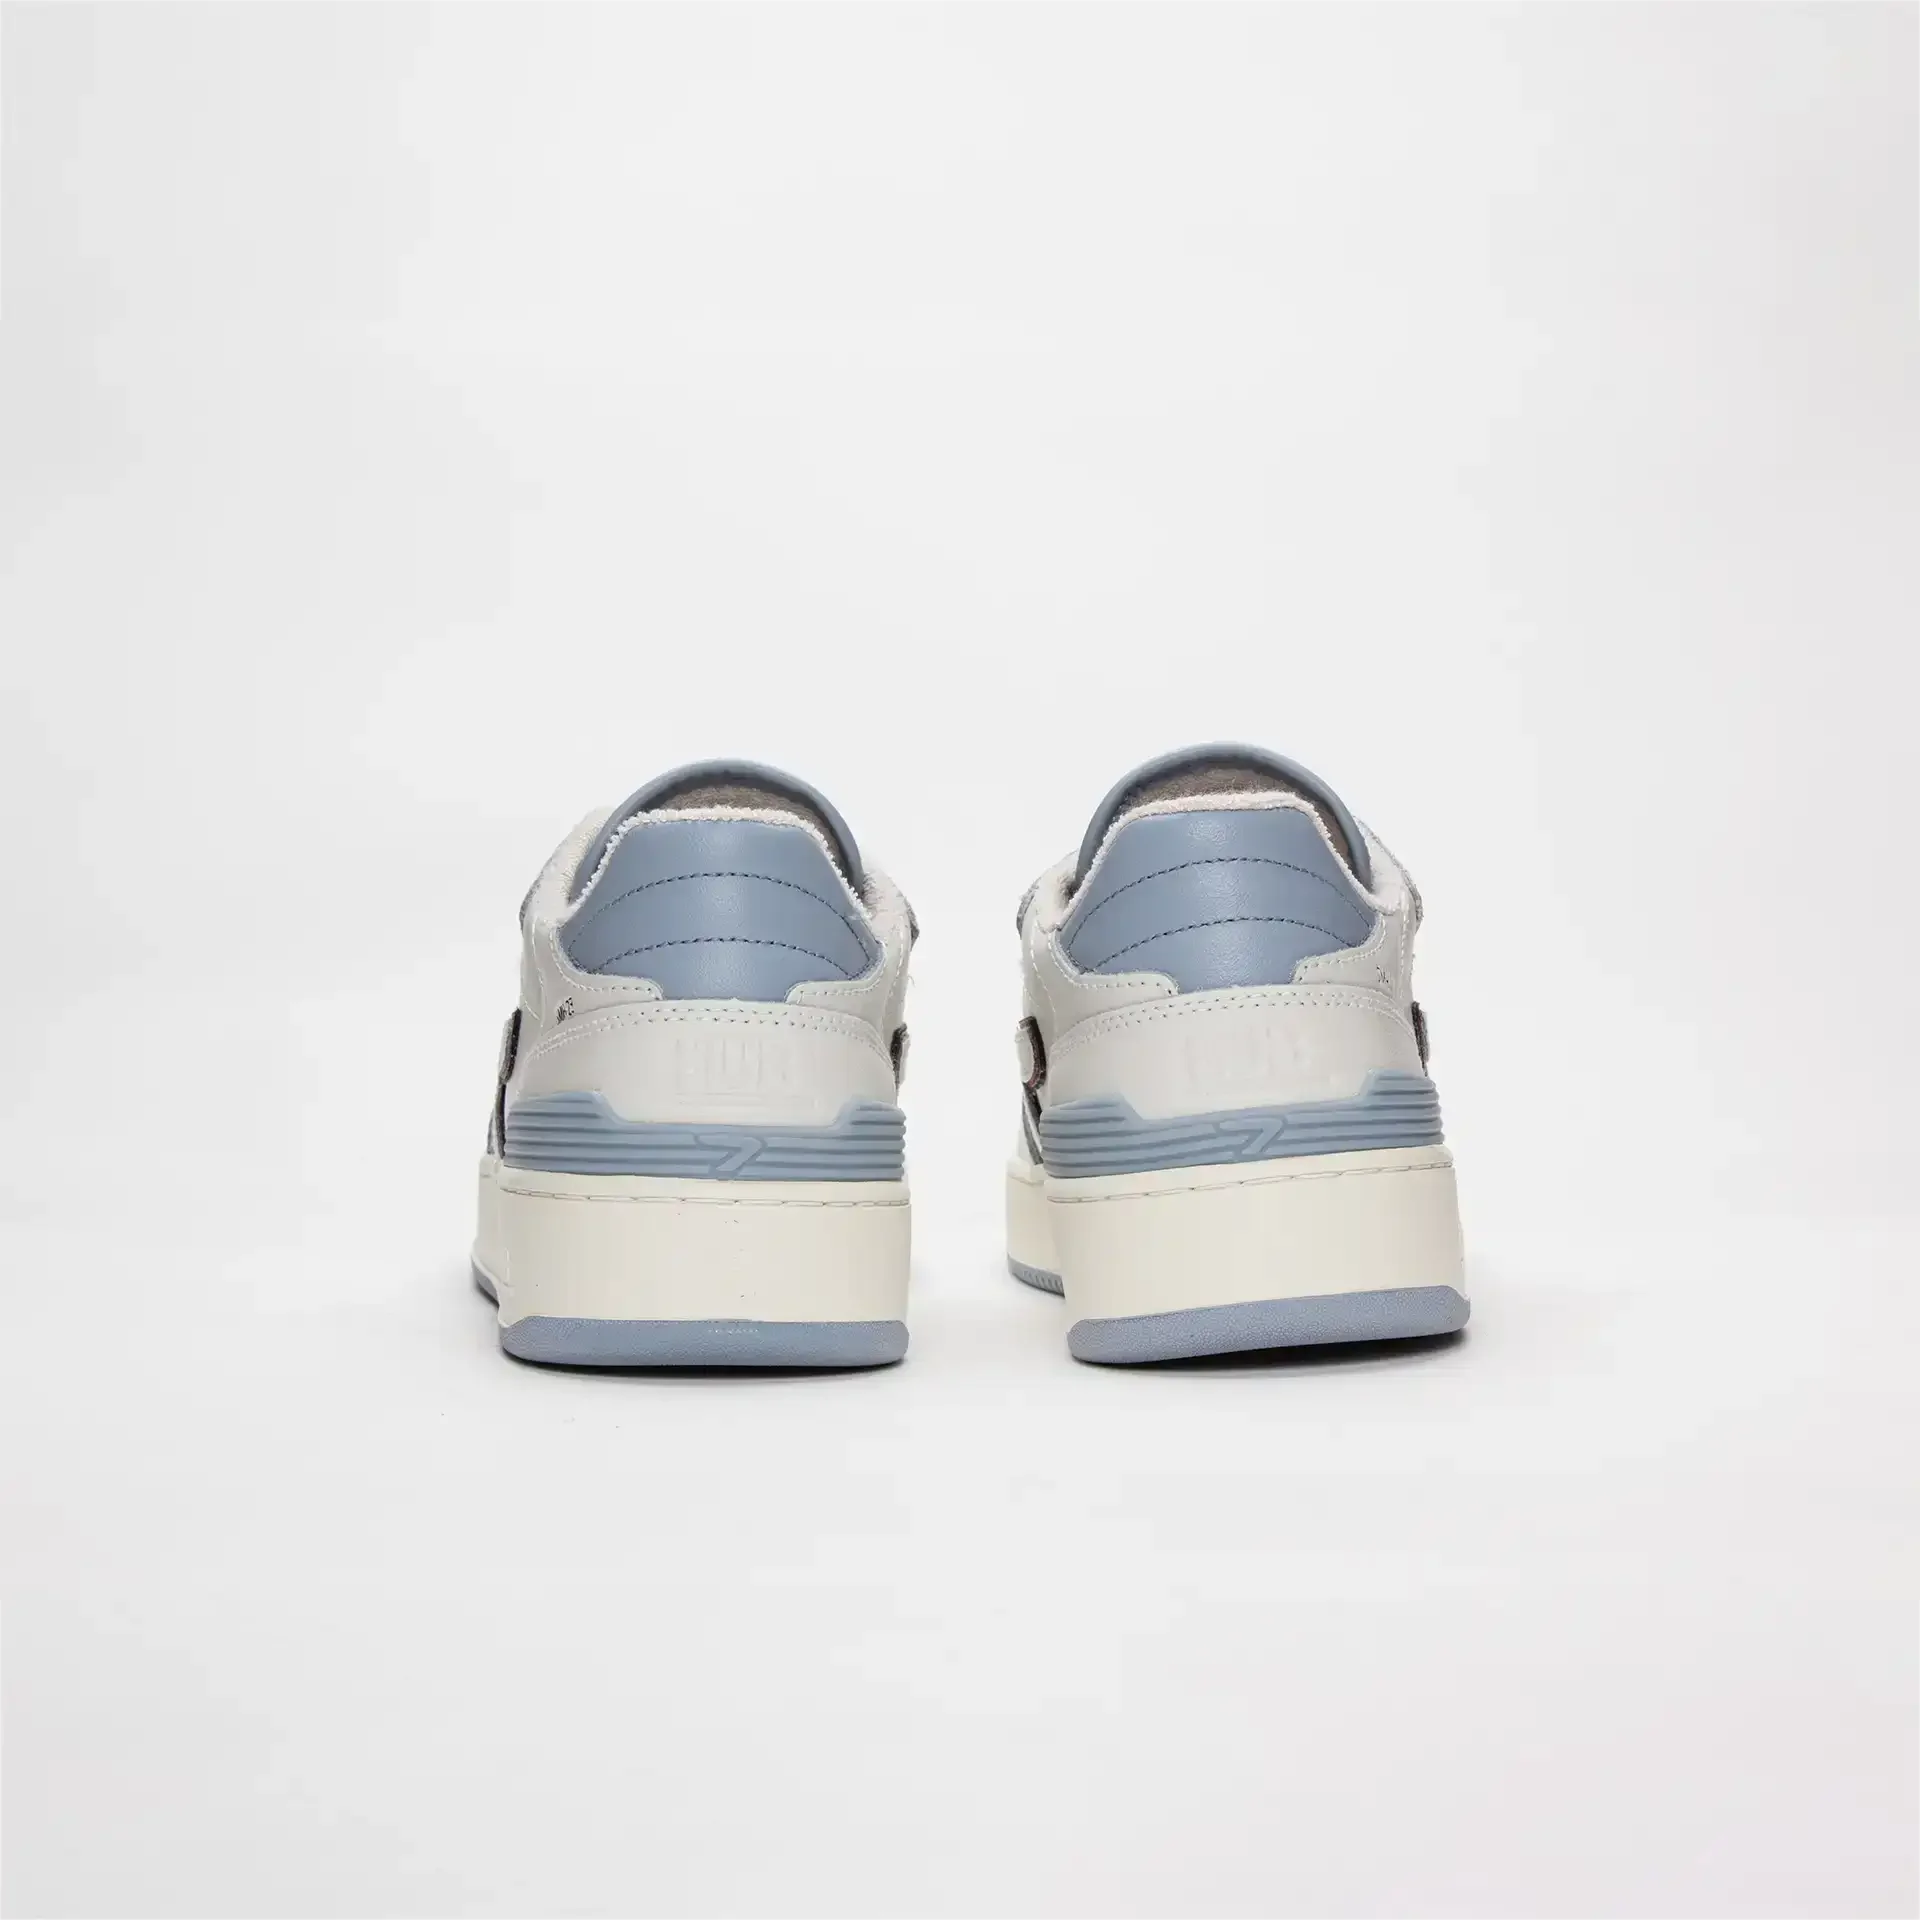 HUB Footwear Smash Sneakers Off White/Light Blue